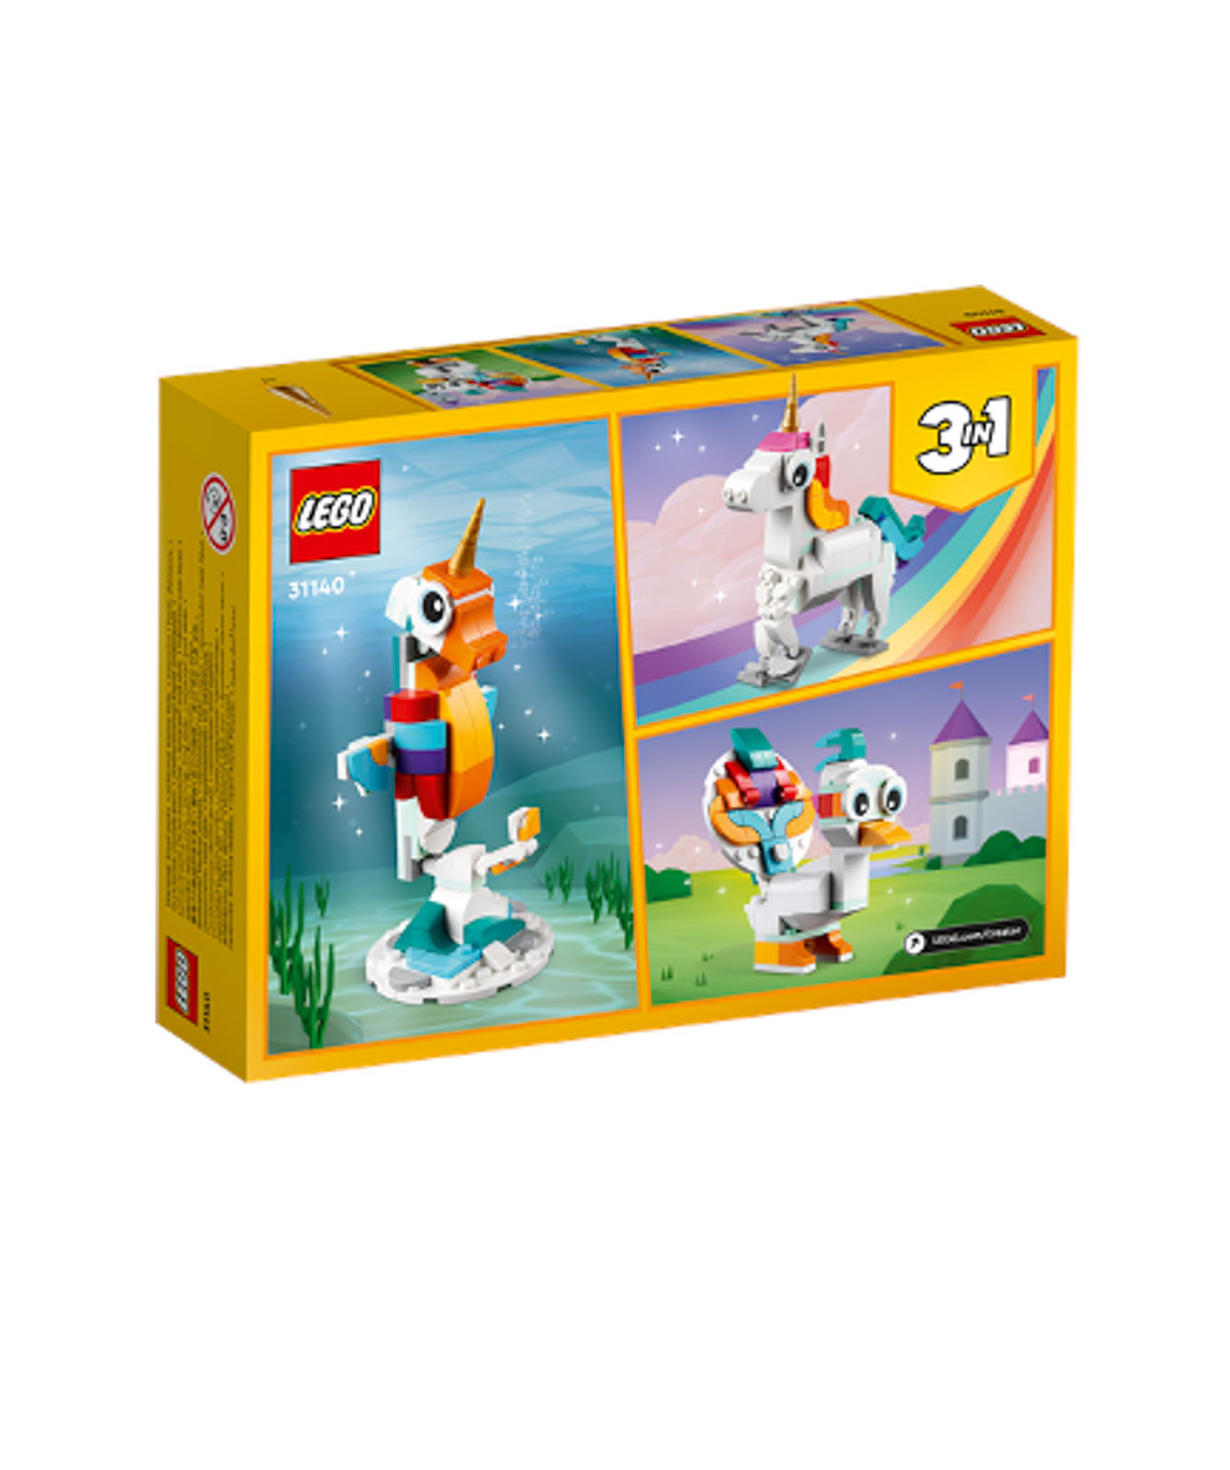 LEGO CREATOR Magic Unicorn 31140